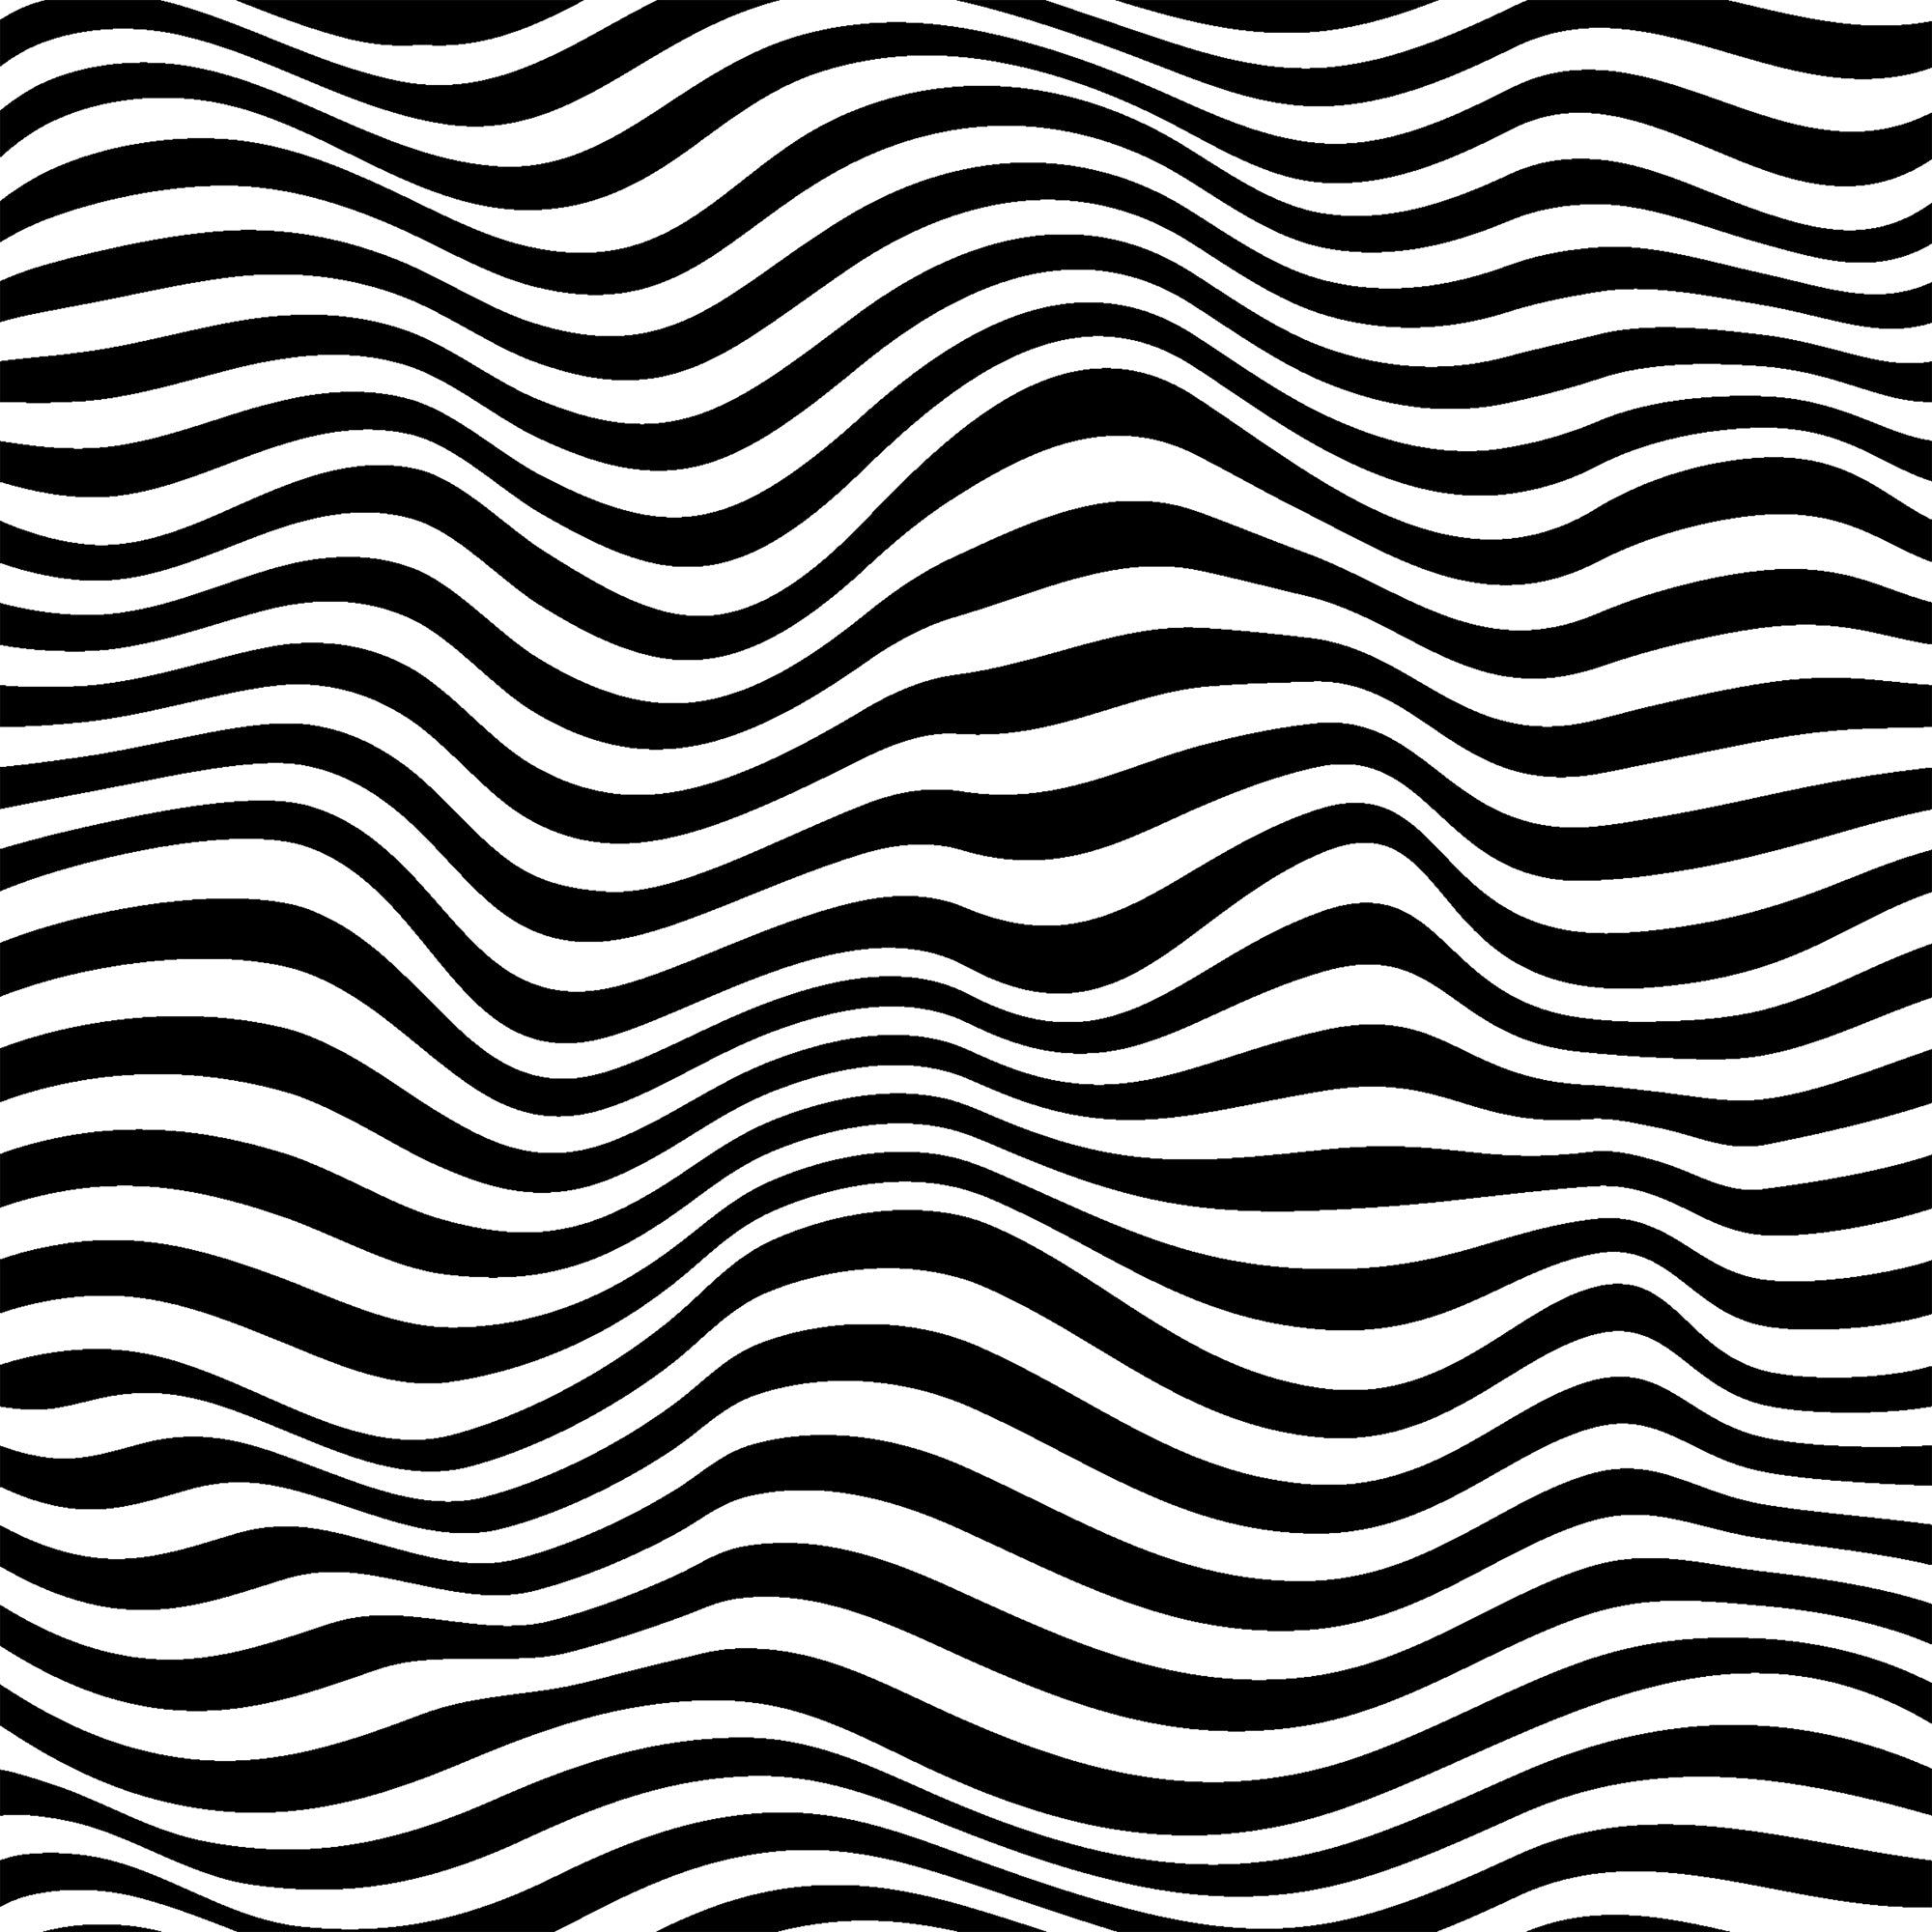 Digital Dot Stripes Wallpapers